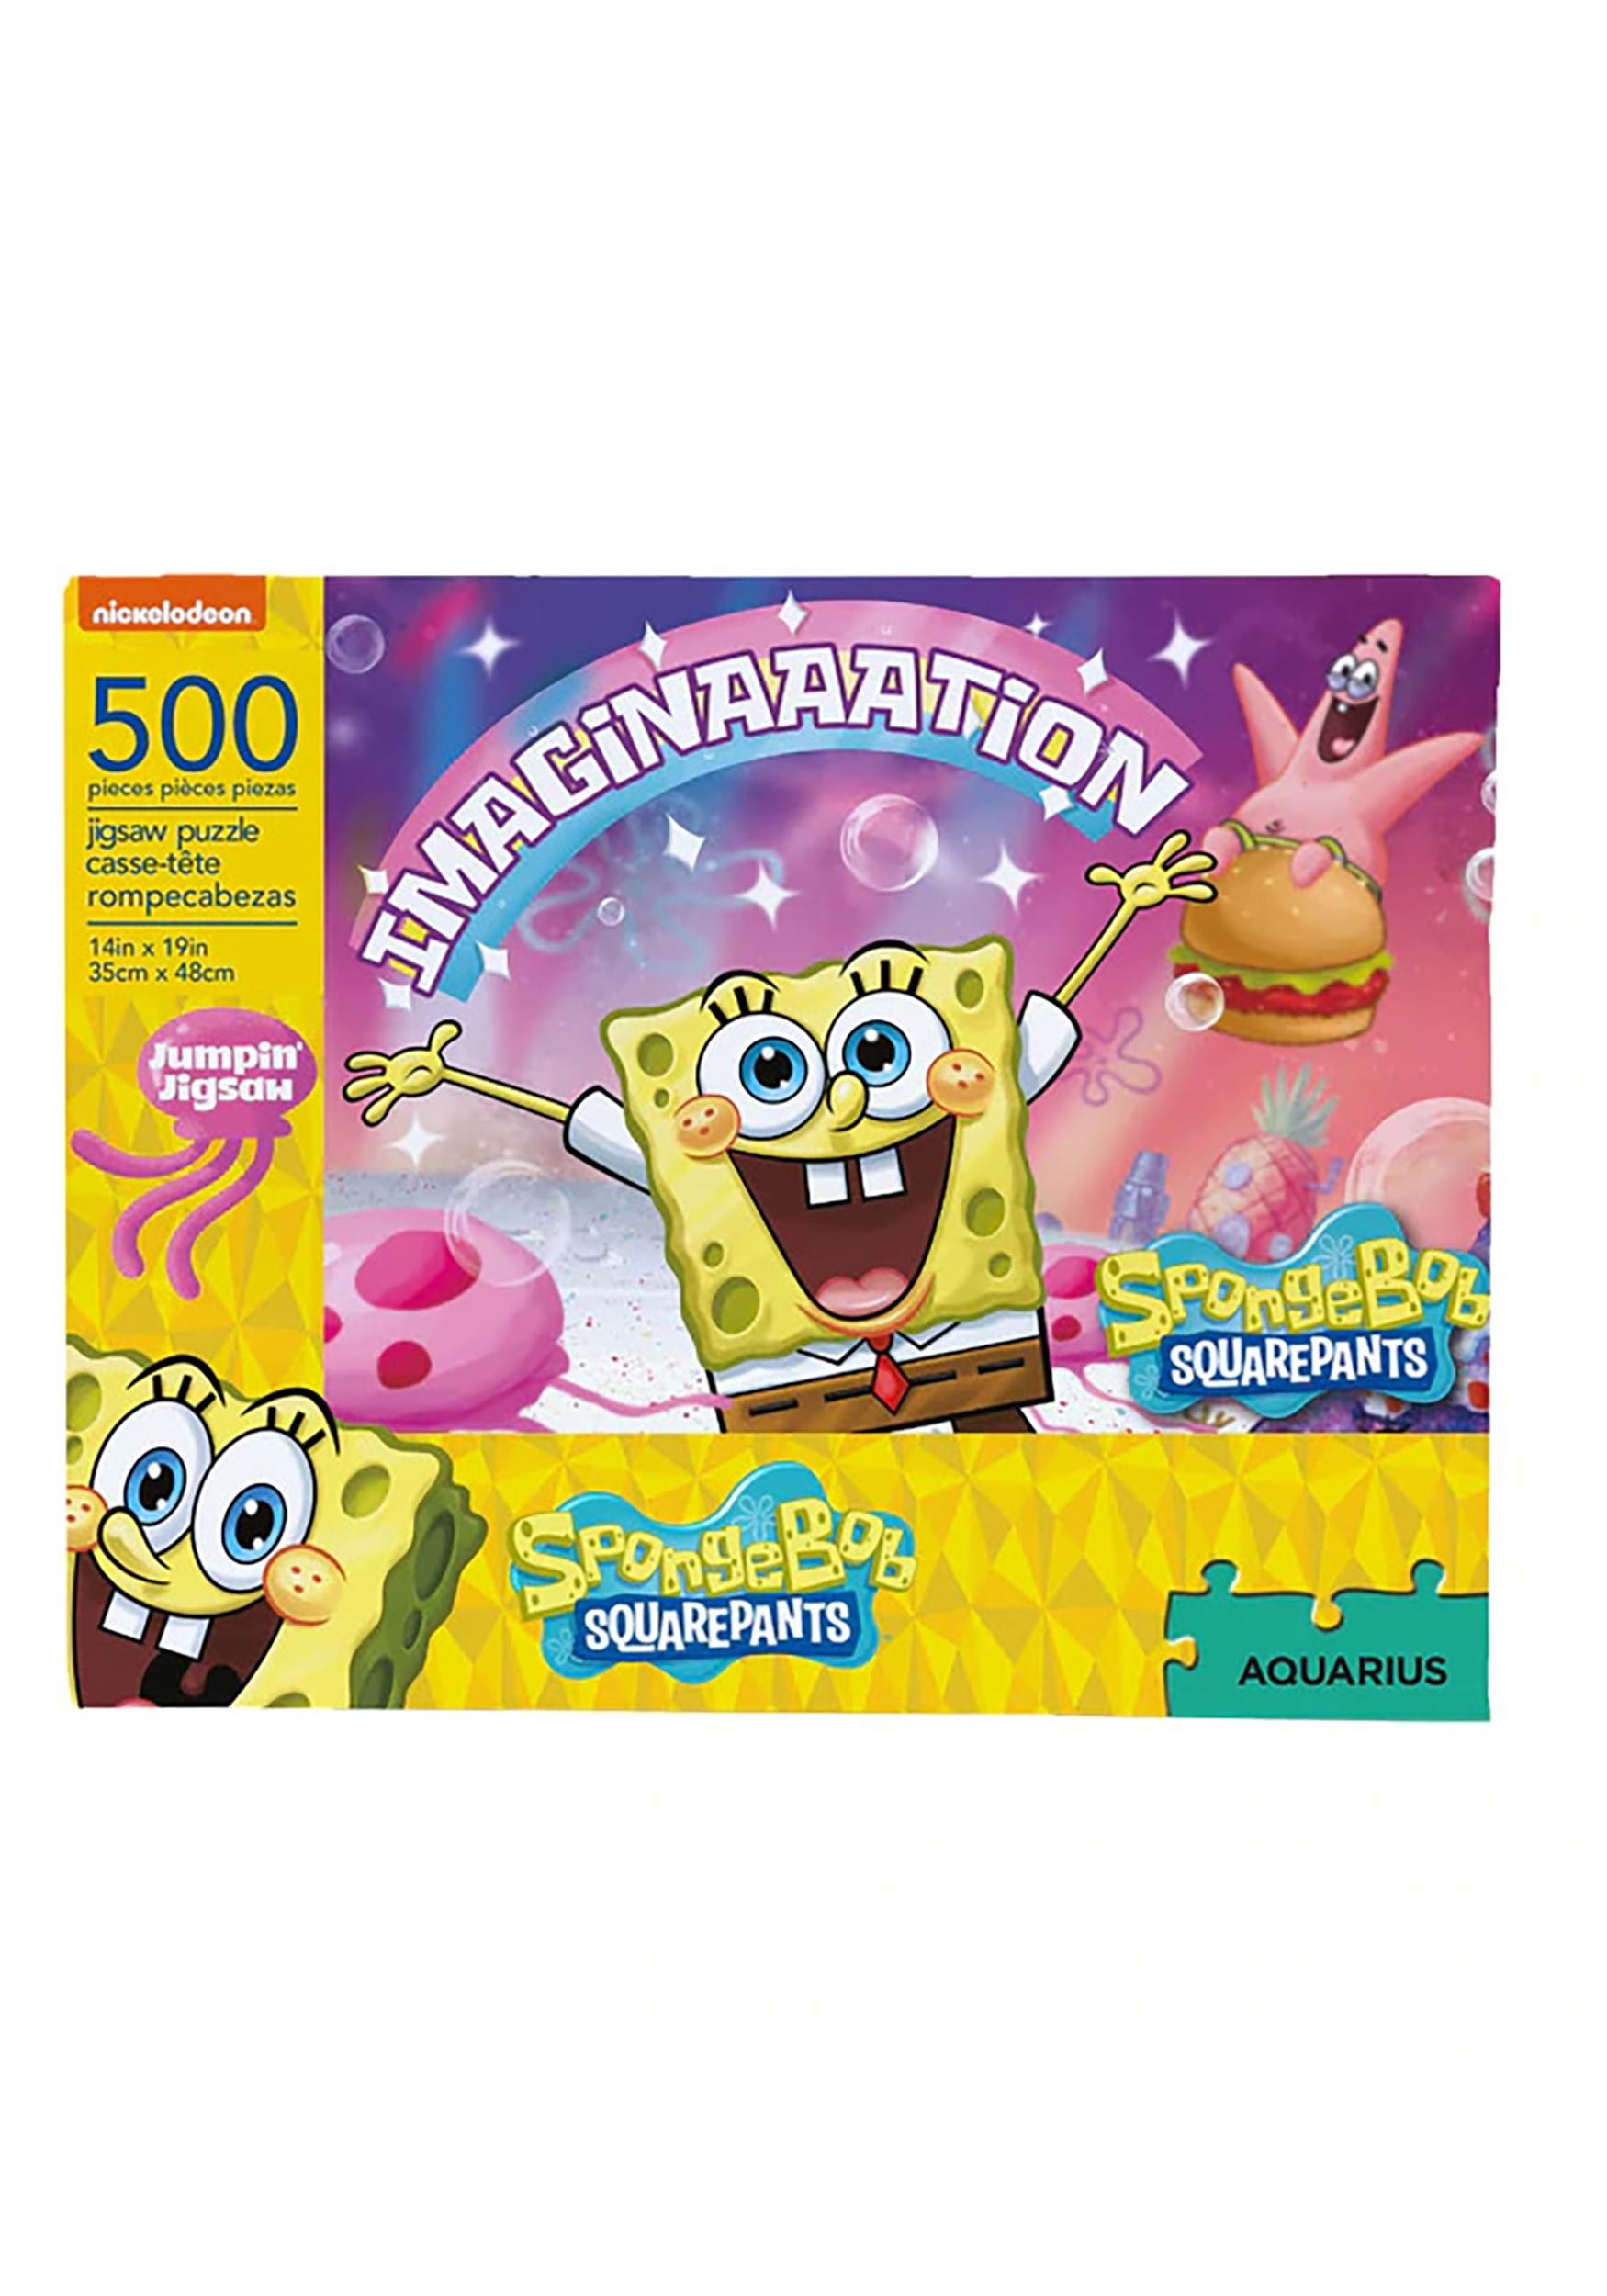 Spongebob Squarepants Imaginaaation 500 Piece Jigsaw Puzzle 480mm x 350mm nm 